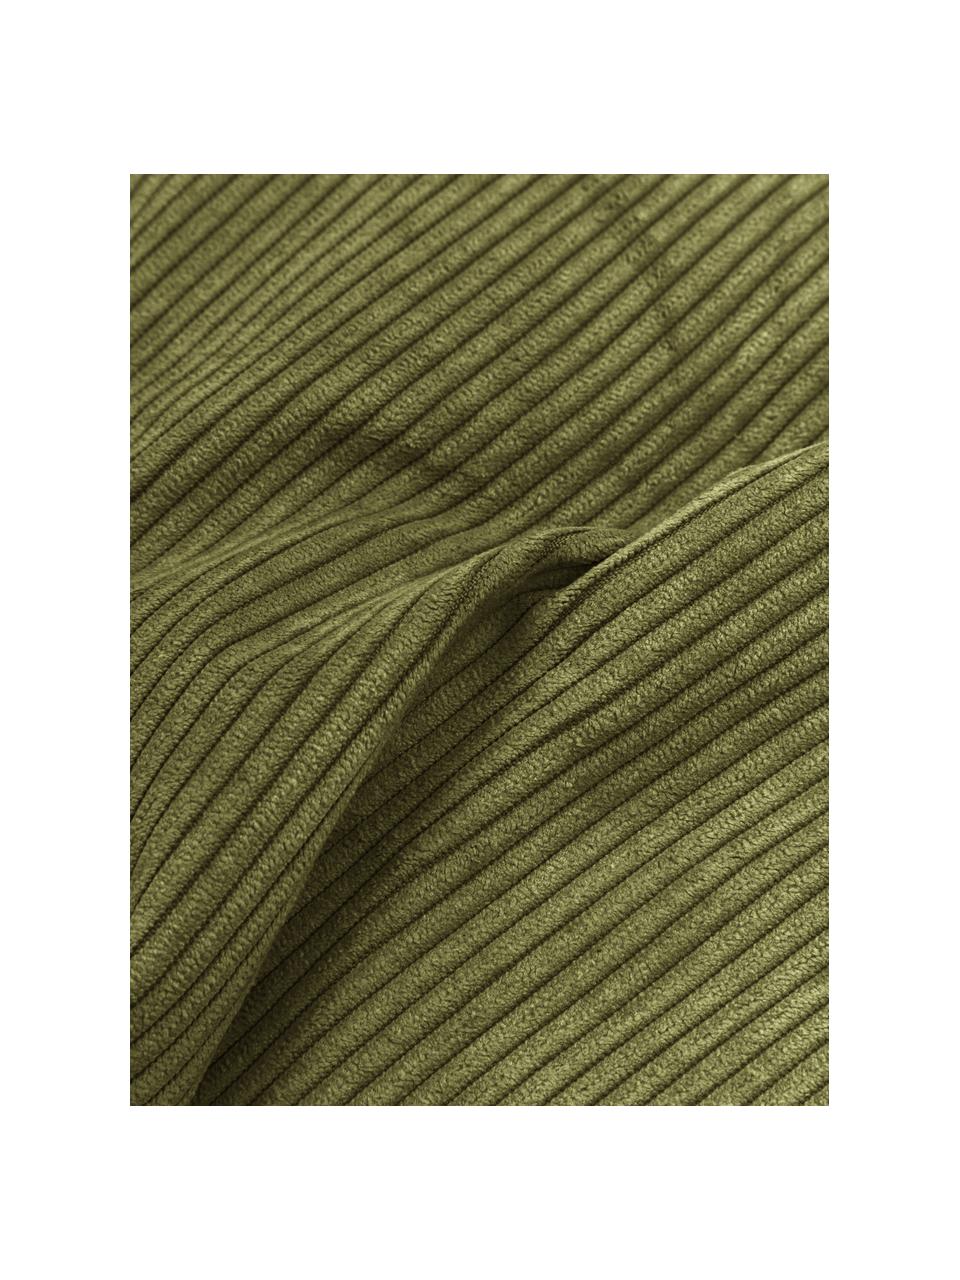 Bankkussen Lennon van corduroy, Groen, corduroy, B 60 x L 60 cm